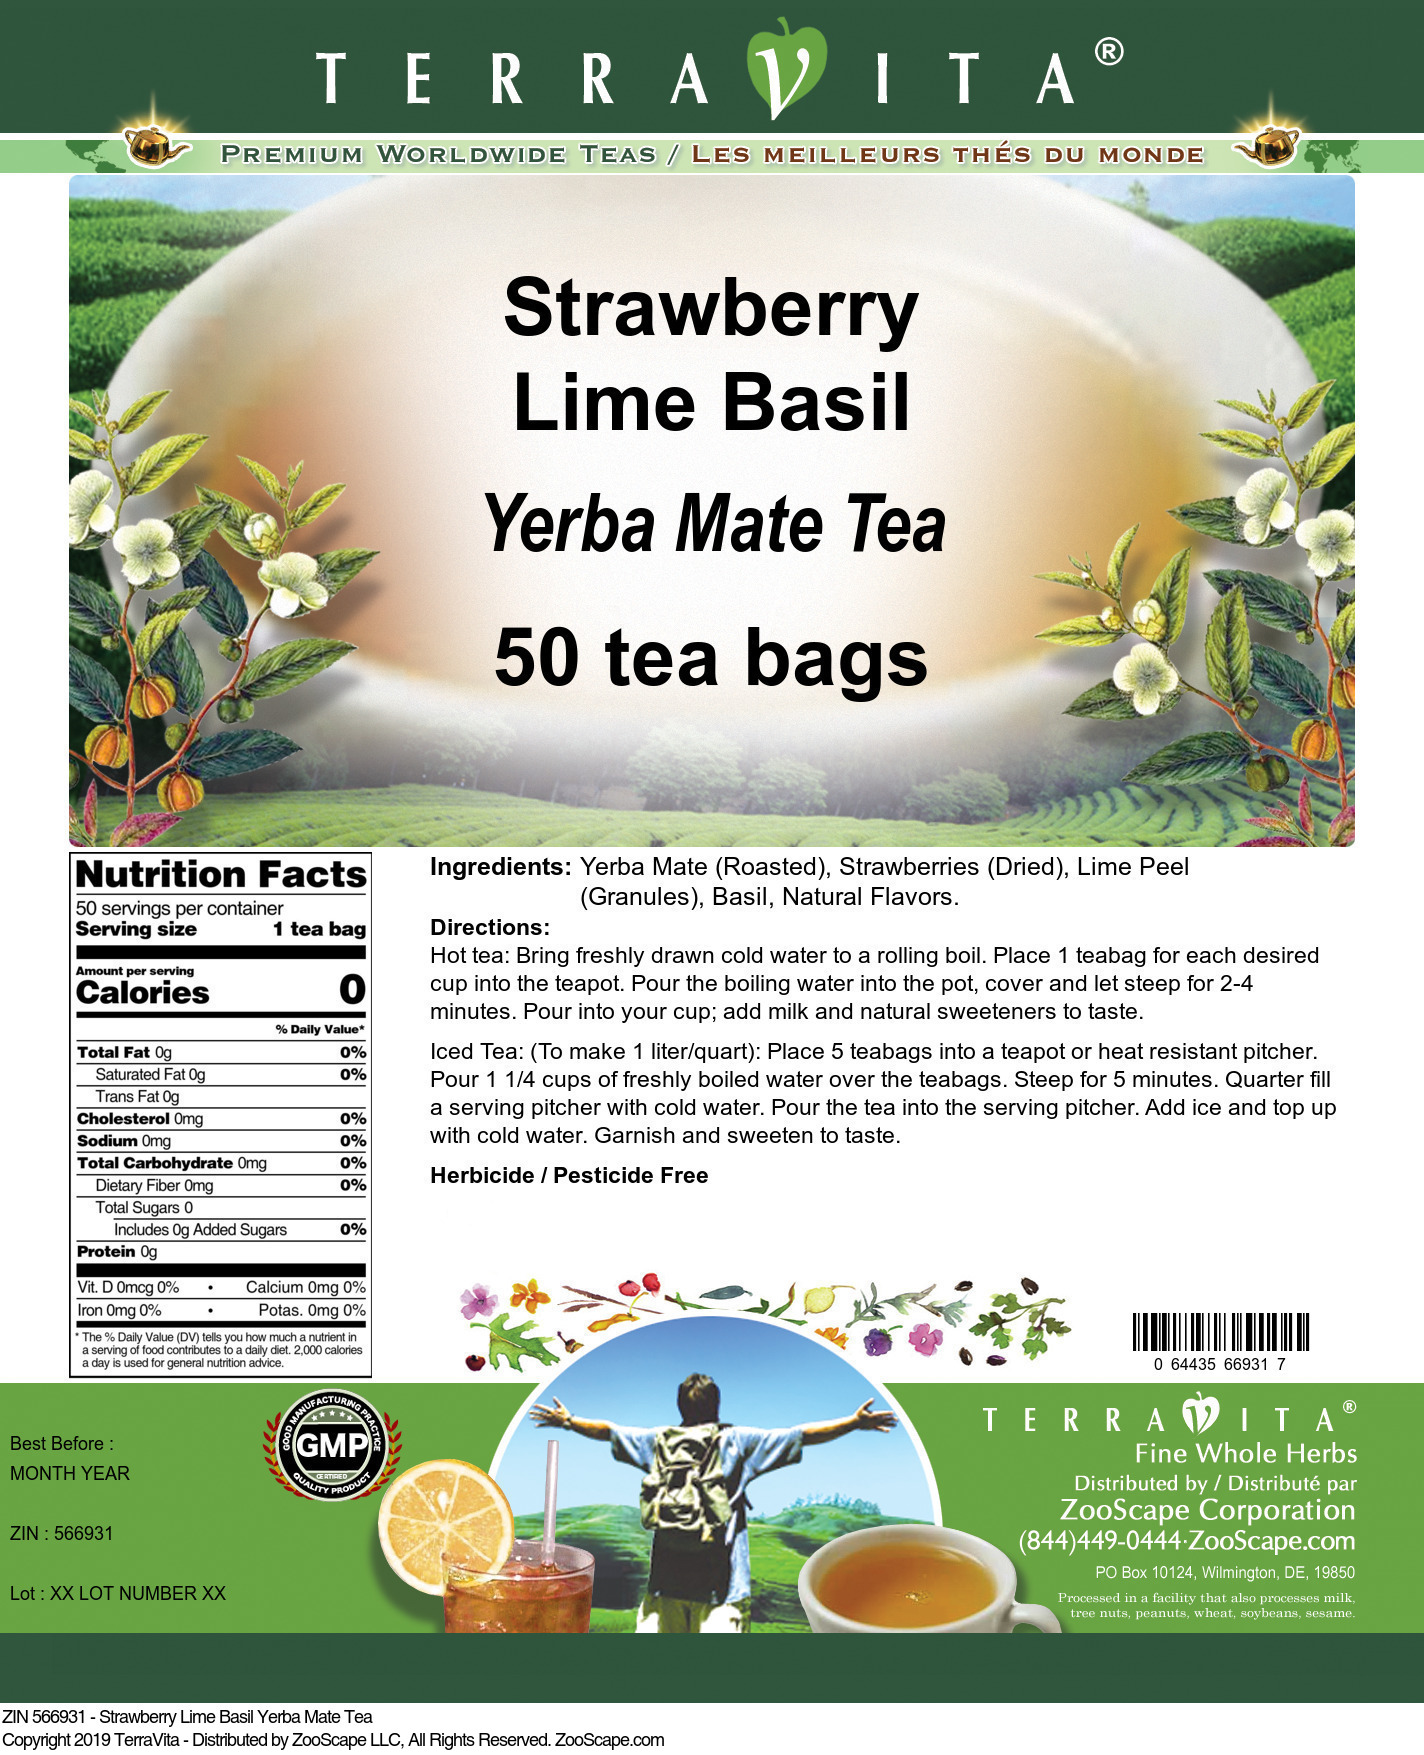 Strawberry Lime Basil Yerba Mate Tea - Label